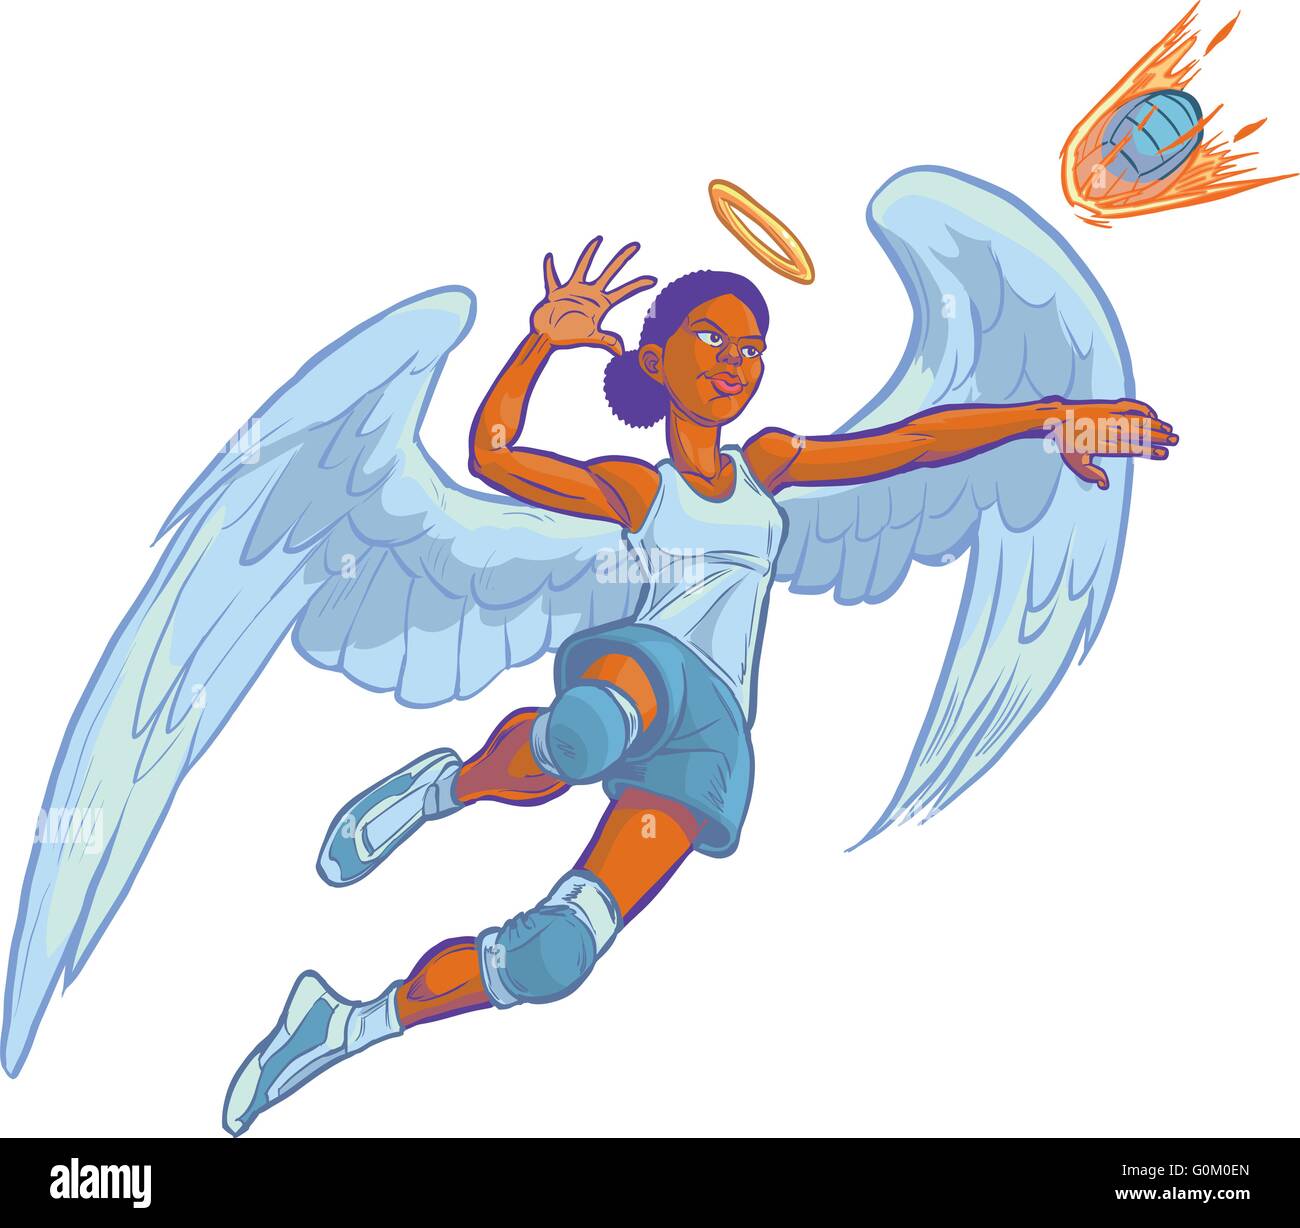 Cartoon clip art illustration d'un African American girl angel volleyball mascot sauter à l'arrivée d'un pic de servir. Illustration de Vecteur